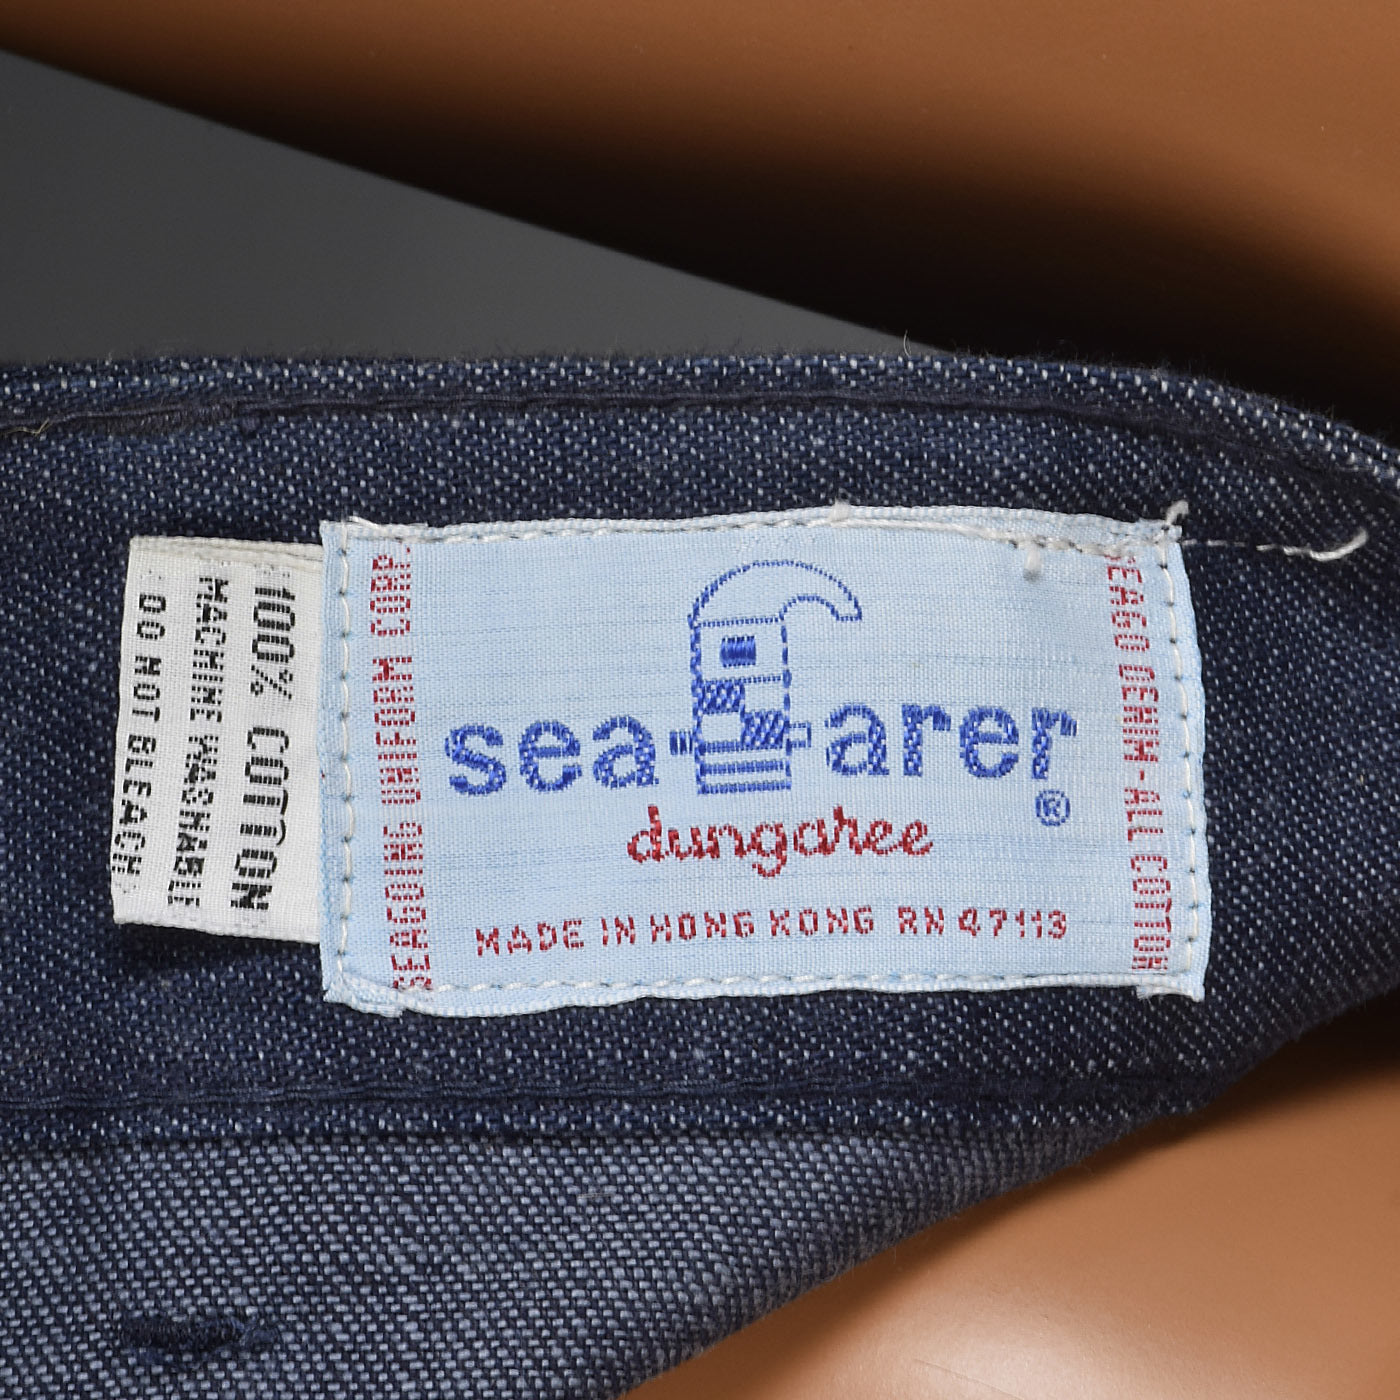 31x32 Deadstock Seafarers Bell Bottom Jeans in Dark Indigo Cotton